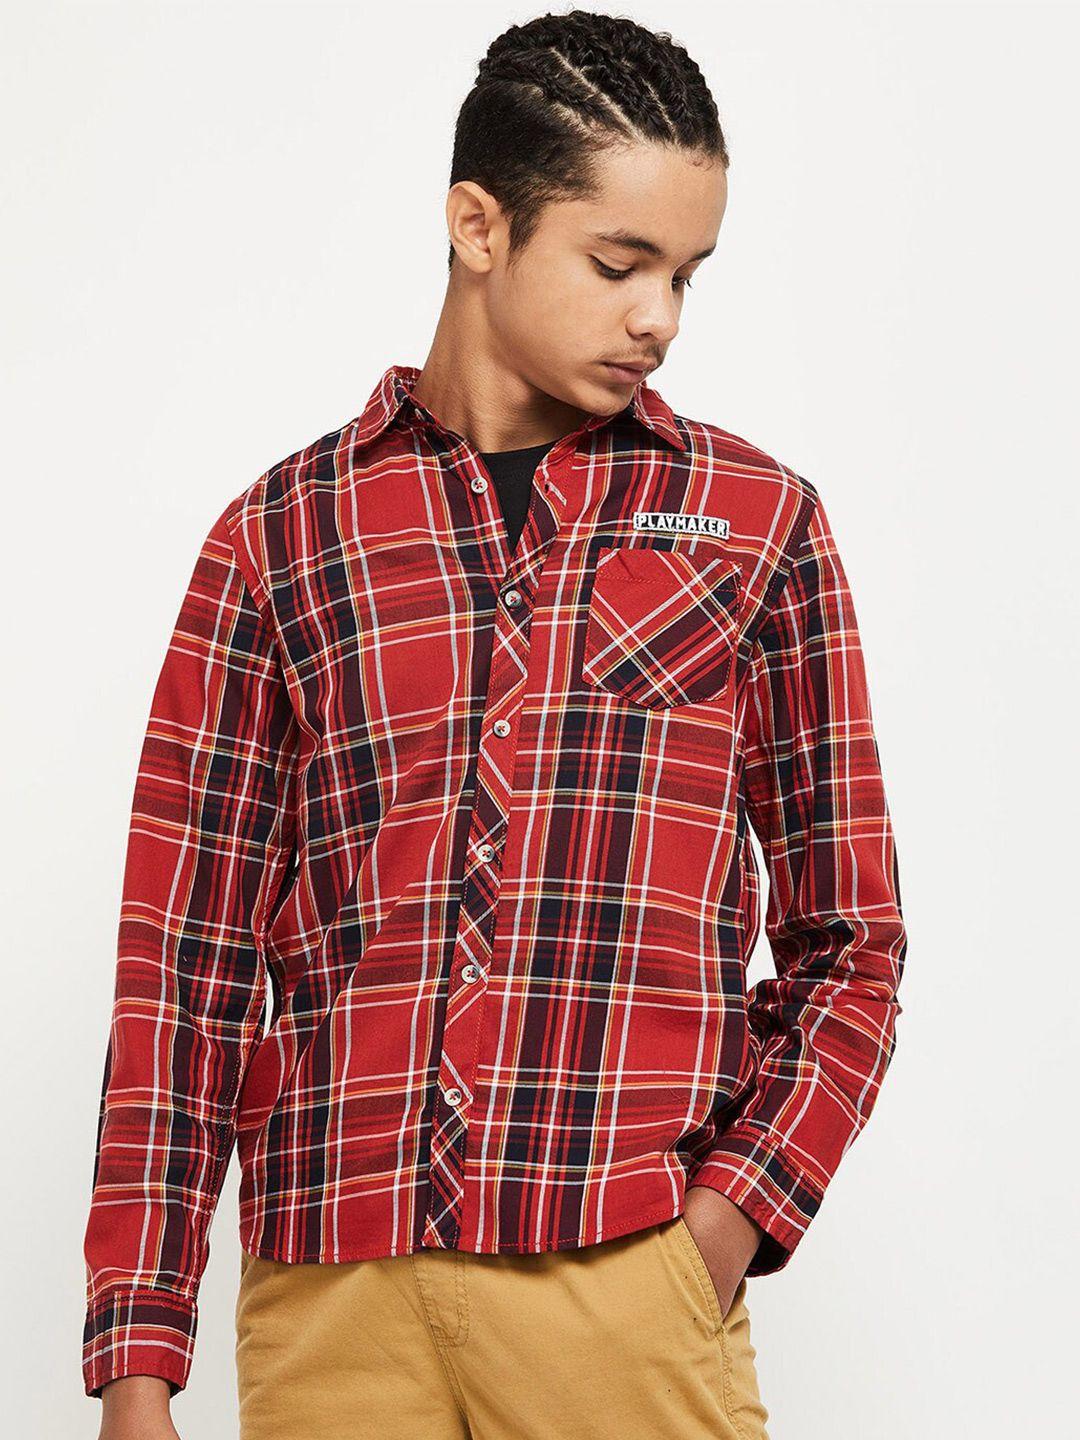 max-boys-red-cotton-tartan-checks-casual-shirt